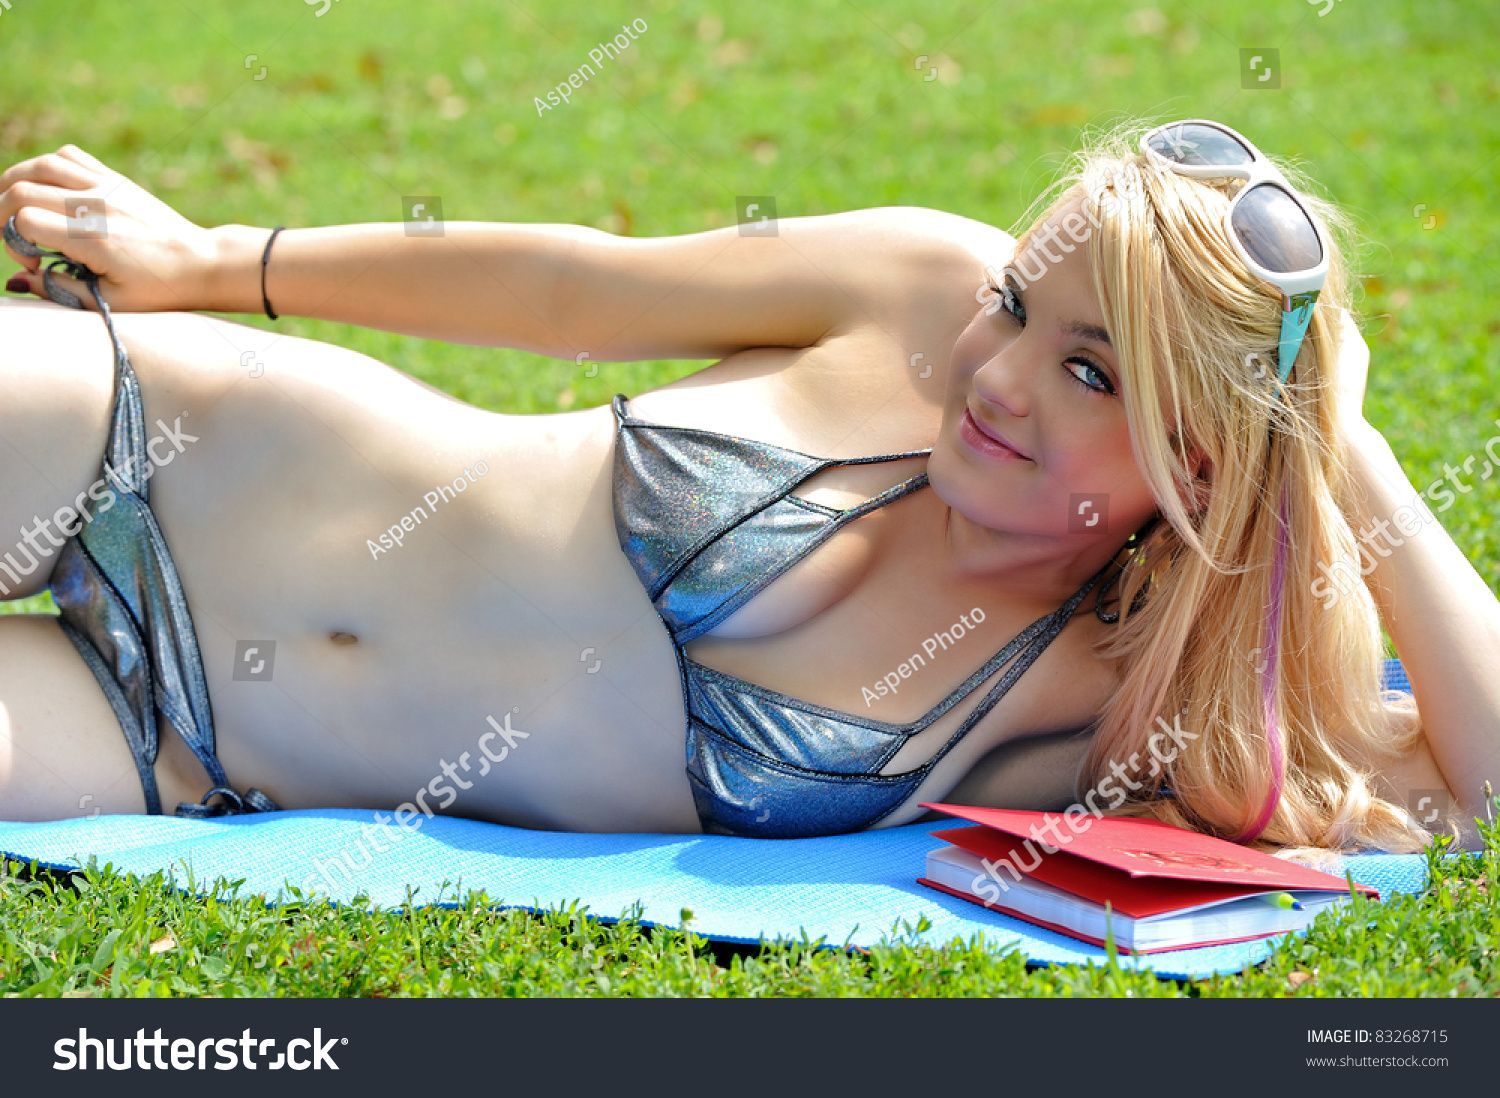 Laying out bikini